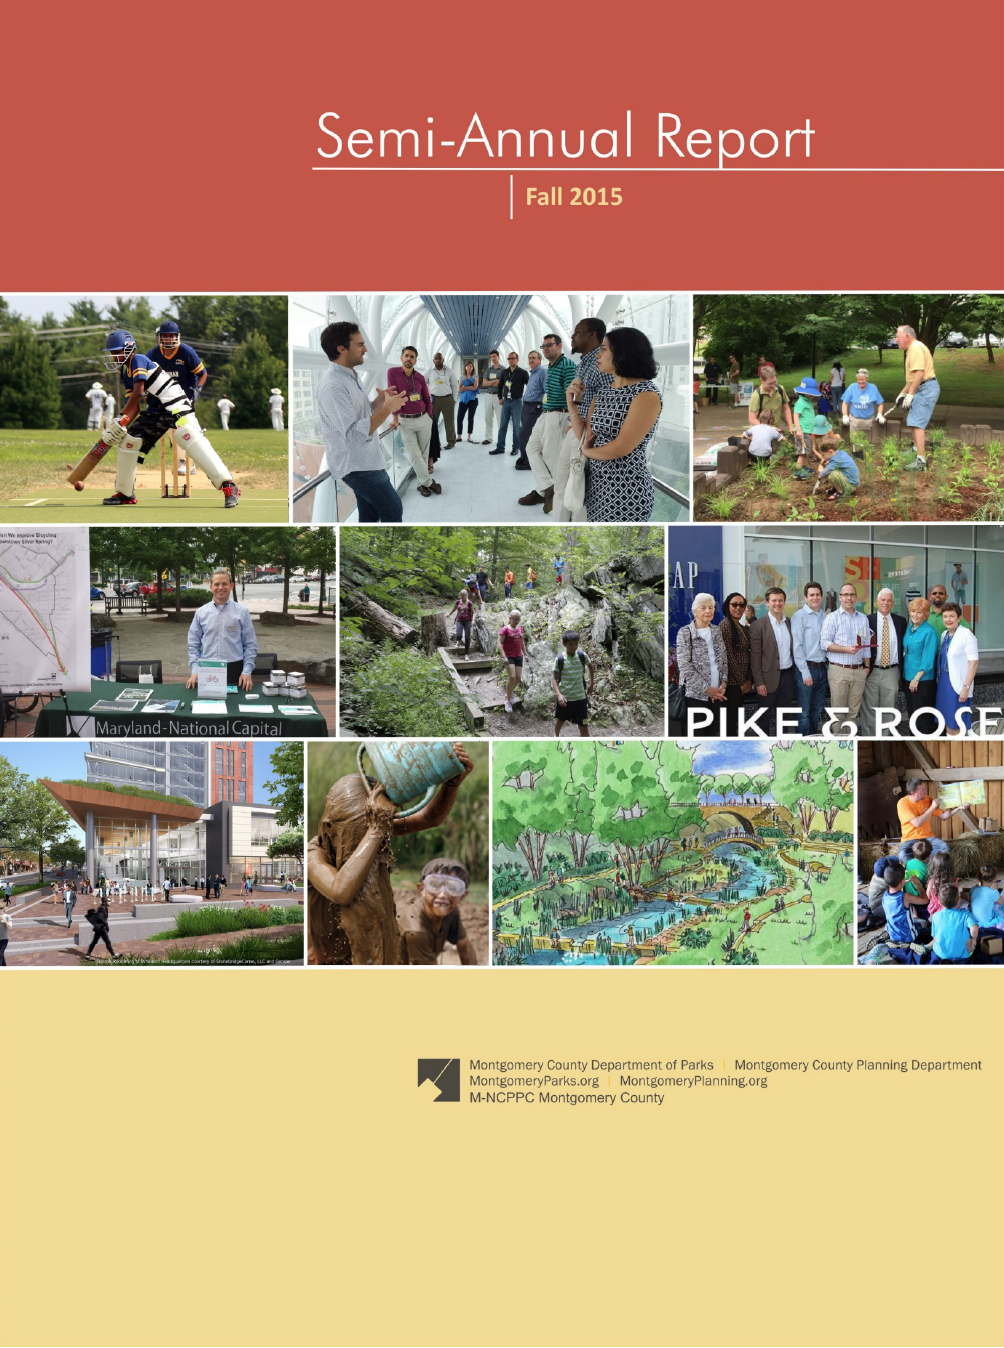 Fall 2015 Semi-Annual Report